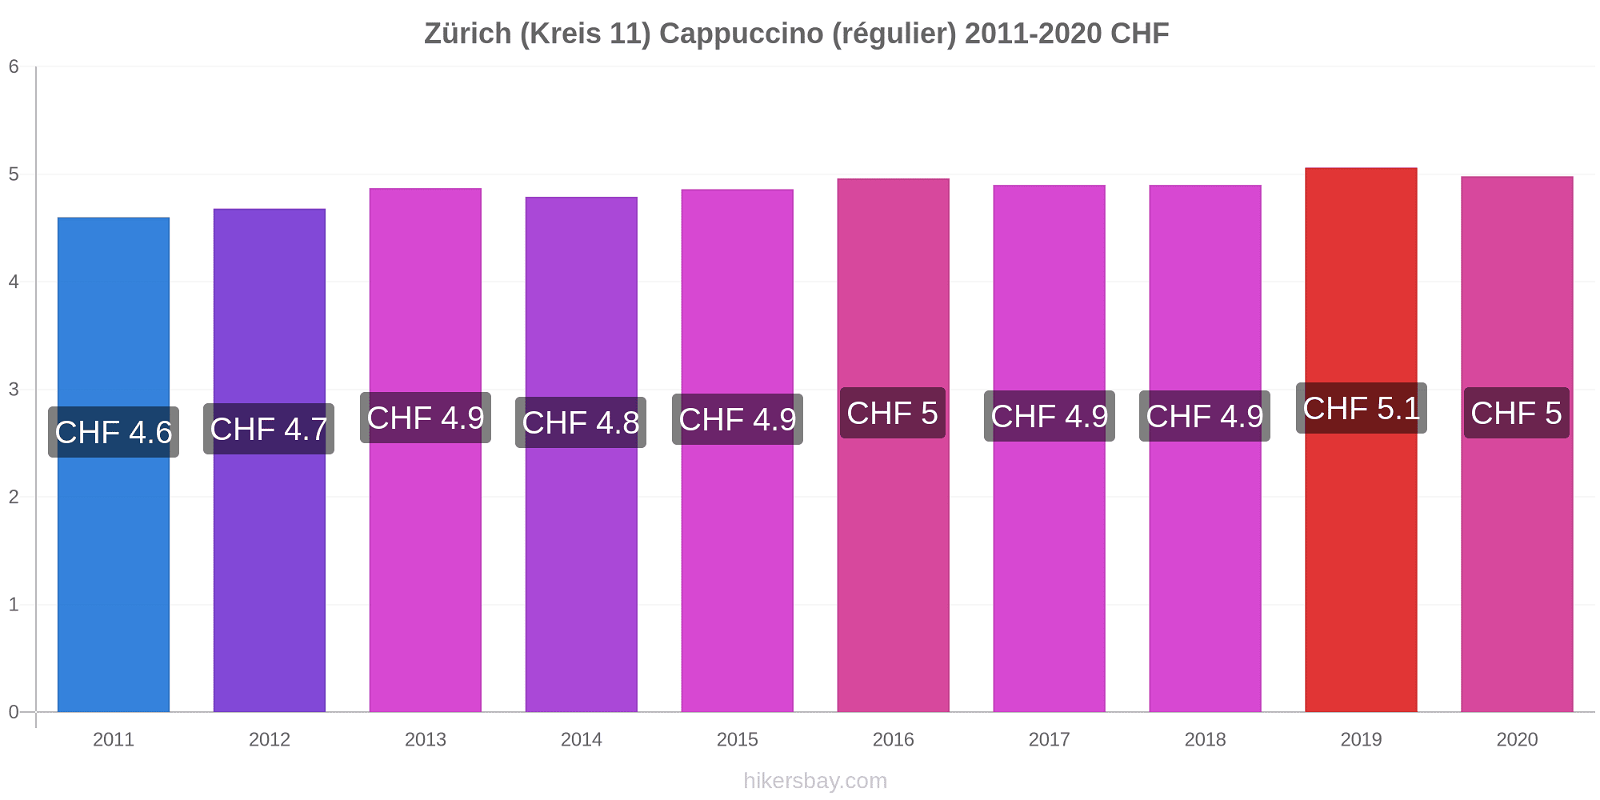 Zürich (Kreis 11) changements de prix Cappuccino (régulier) hikersbay.com